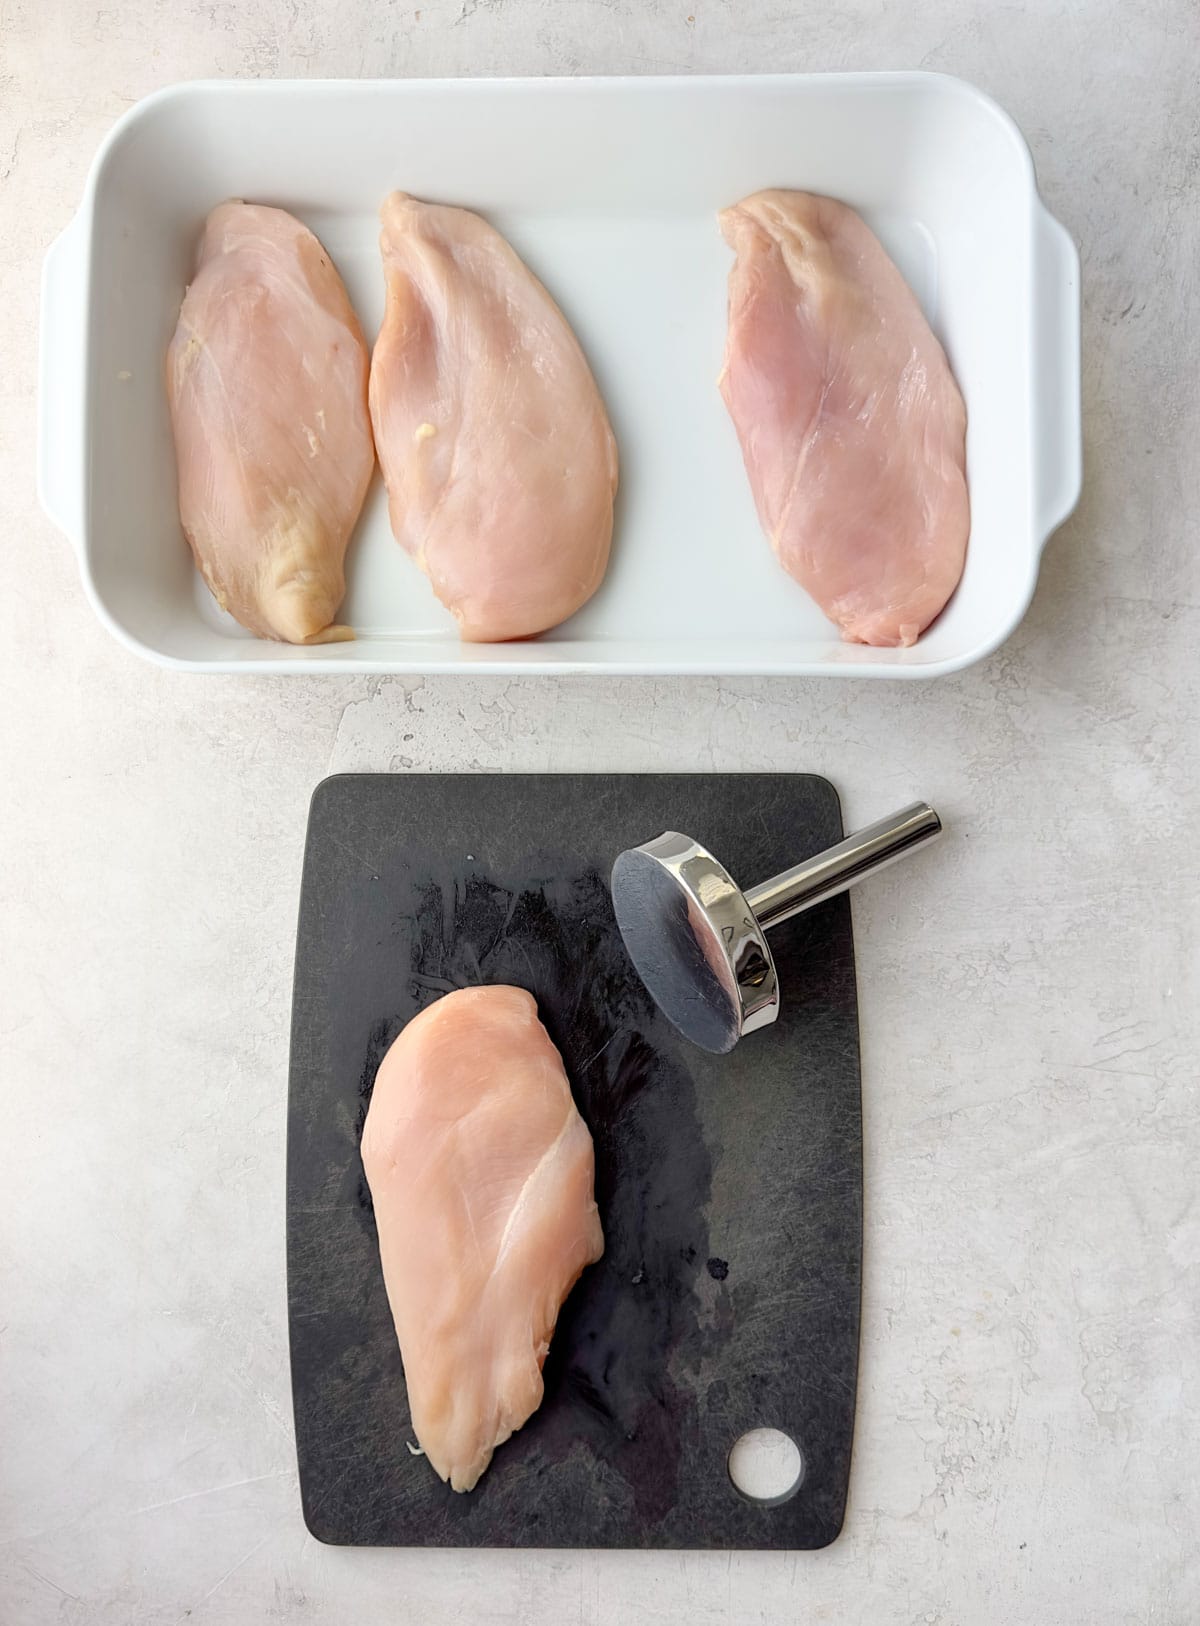 Raw boneless skinless chicken breasts in a casserole dish.